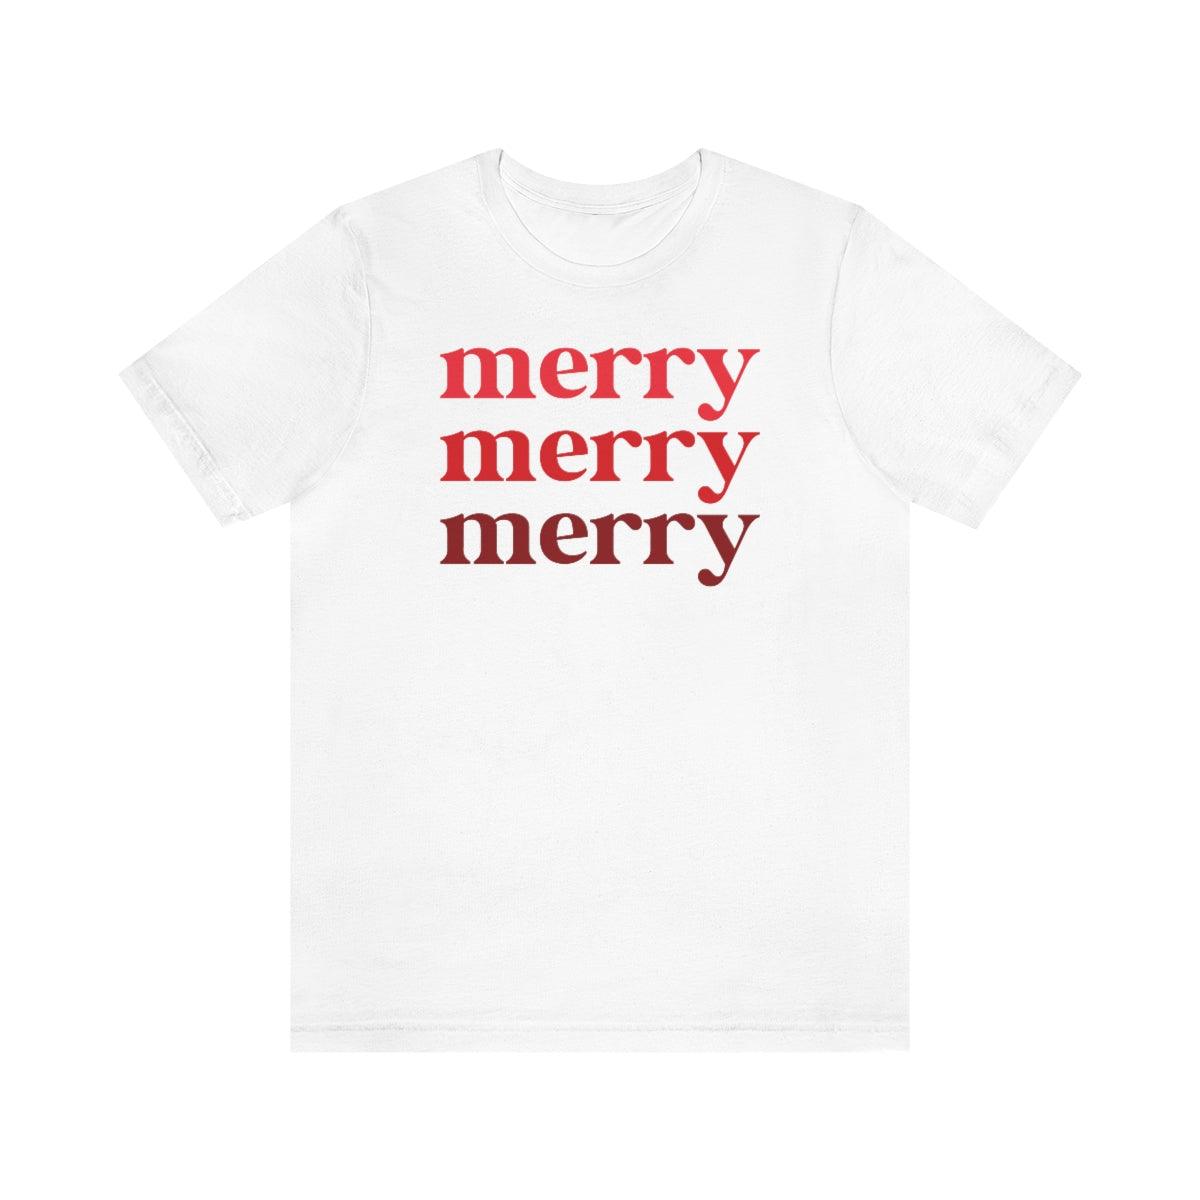 Merry Merry Merry Christmas Shirt Short Sleeve Tee